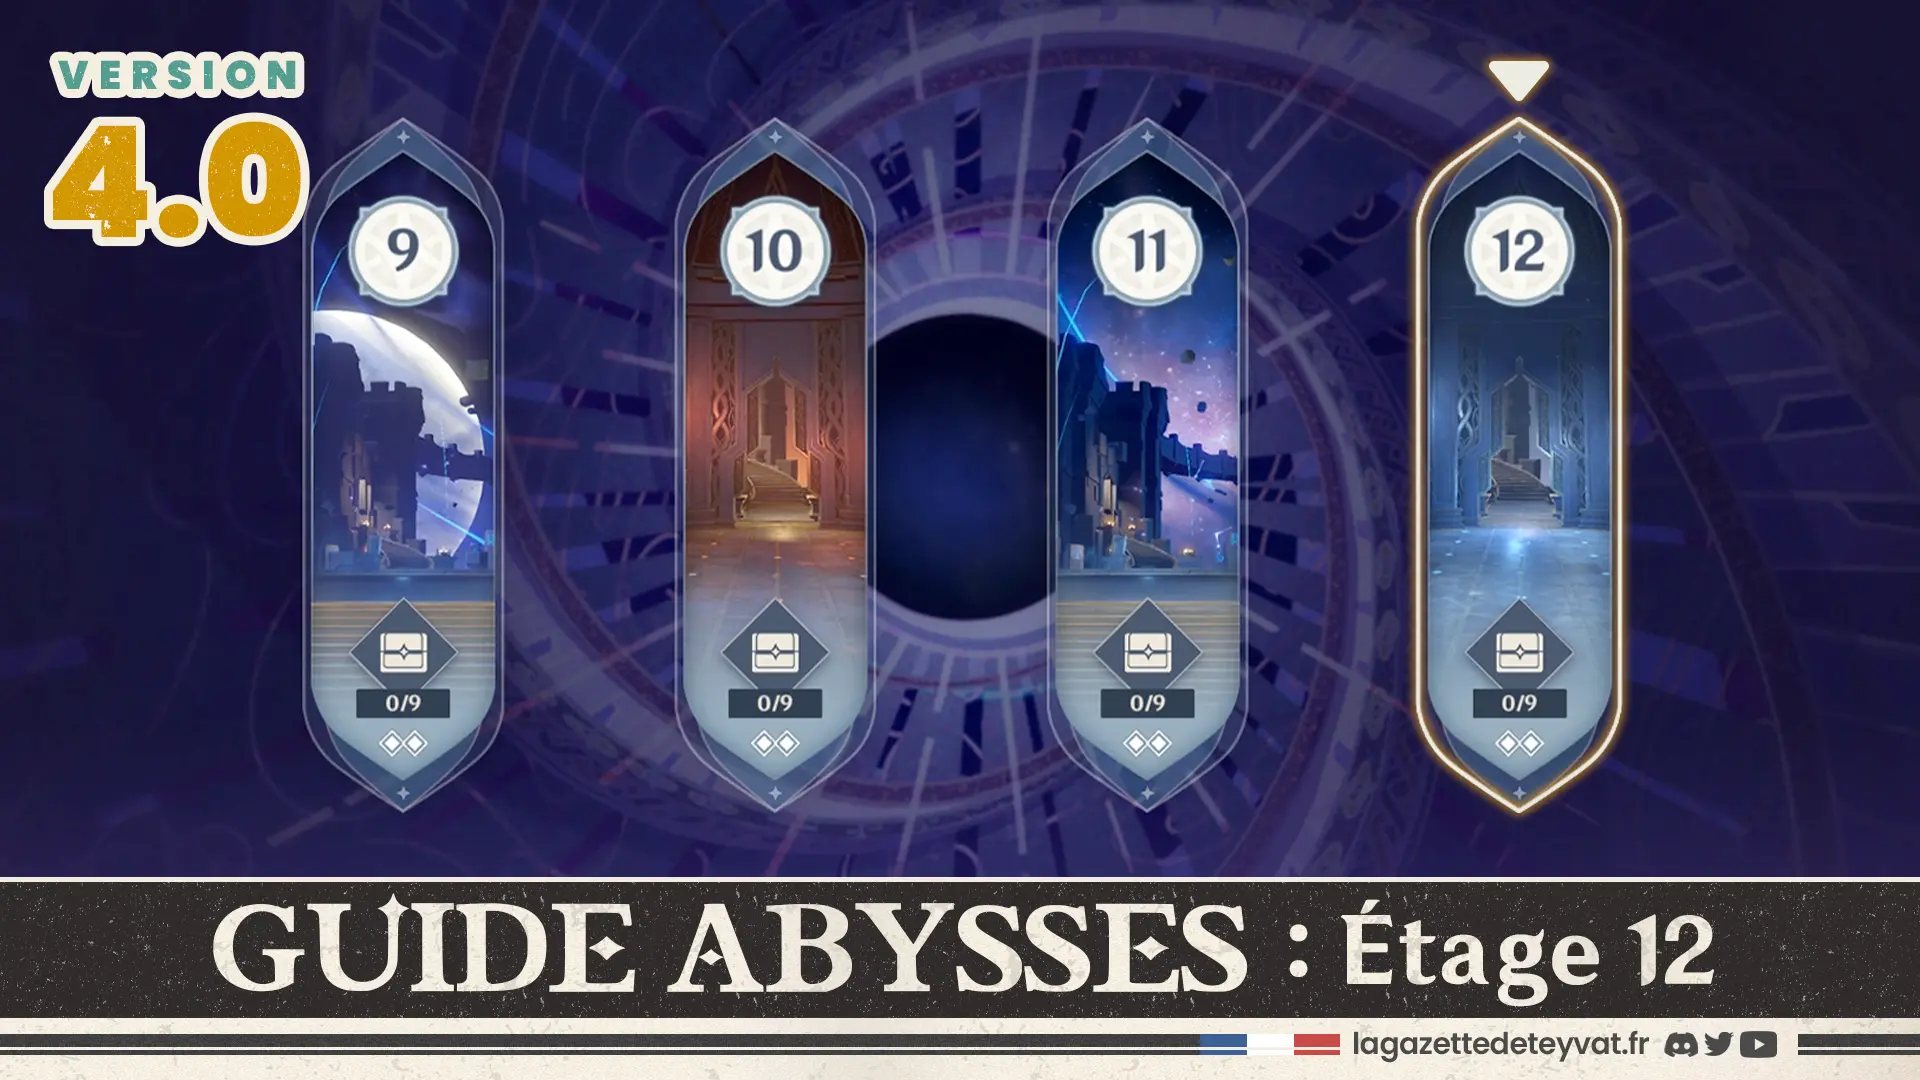 Abysses 4.0 étage 12